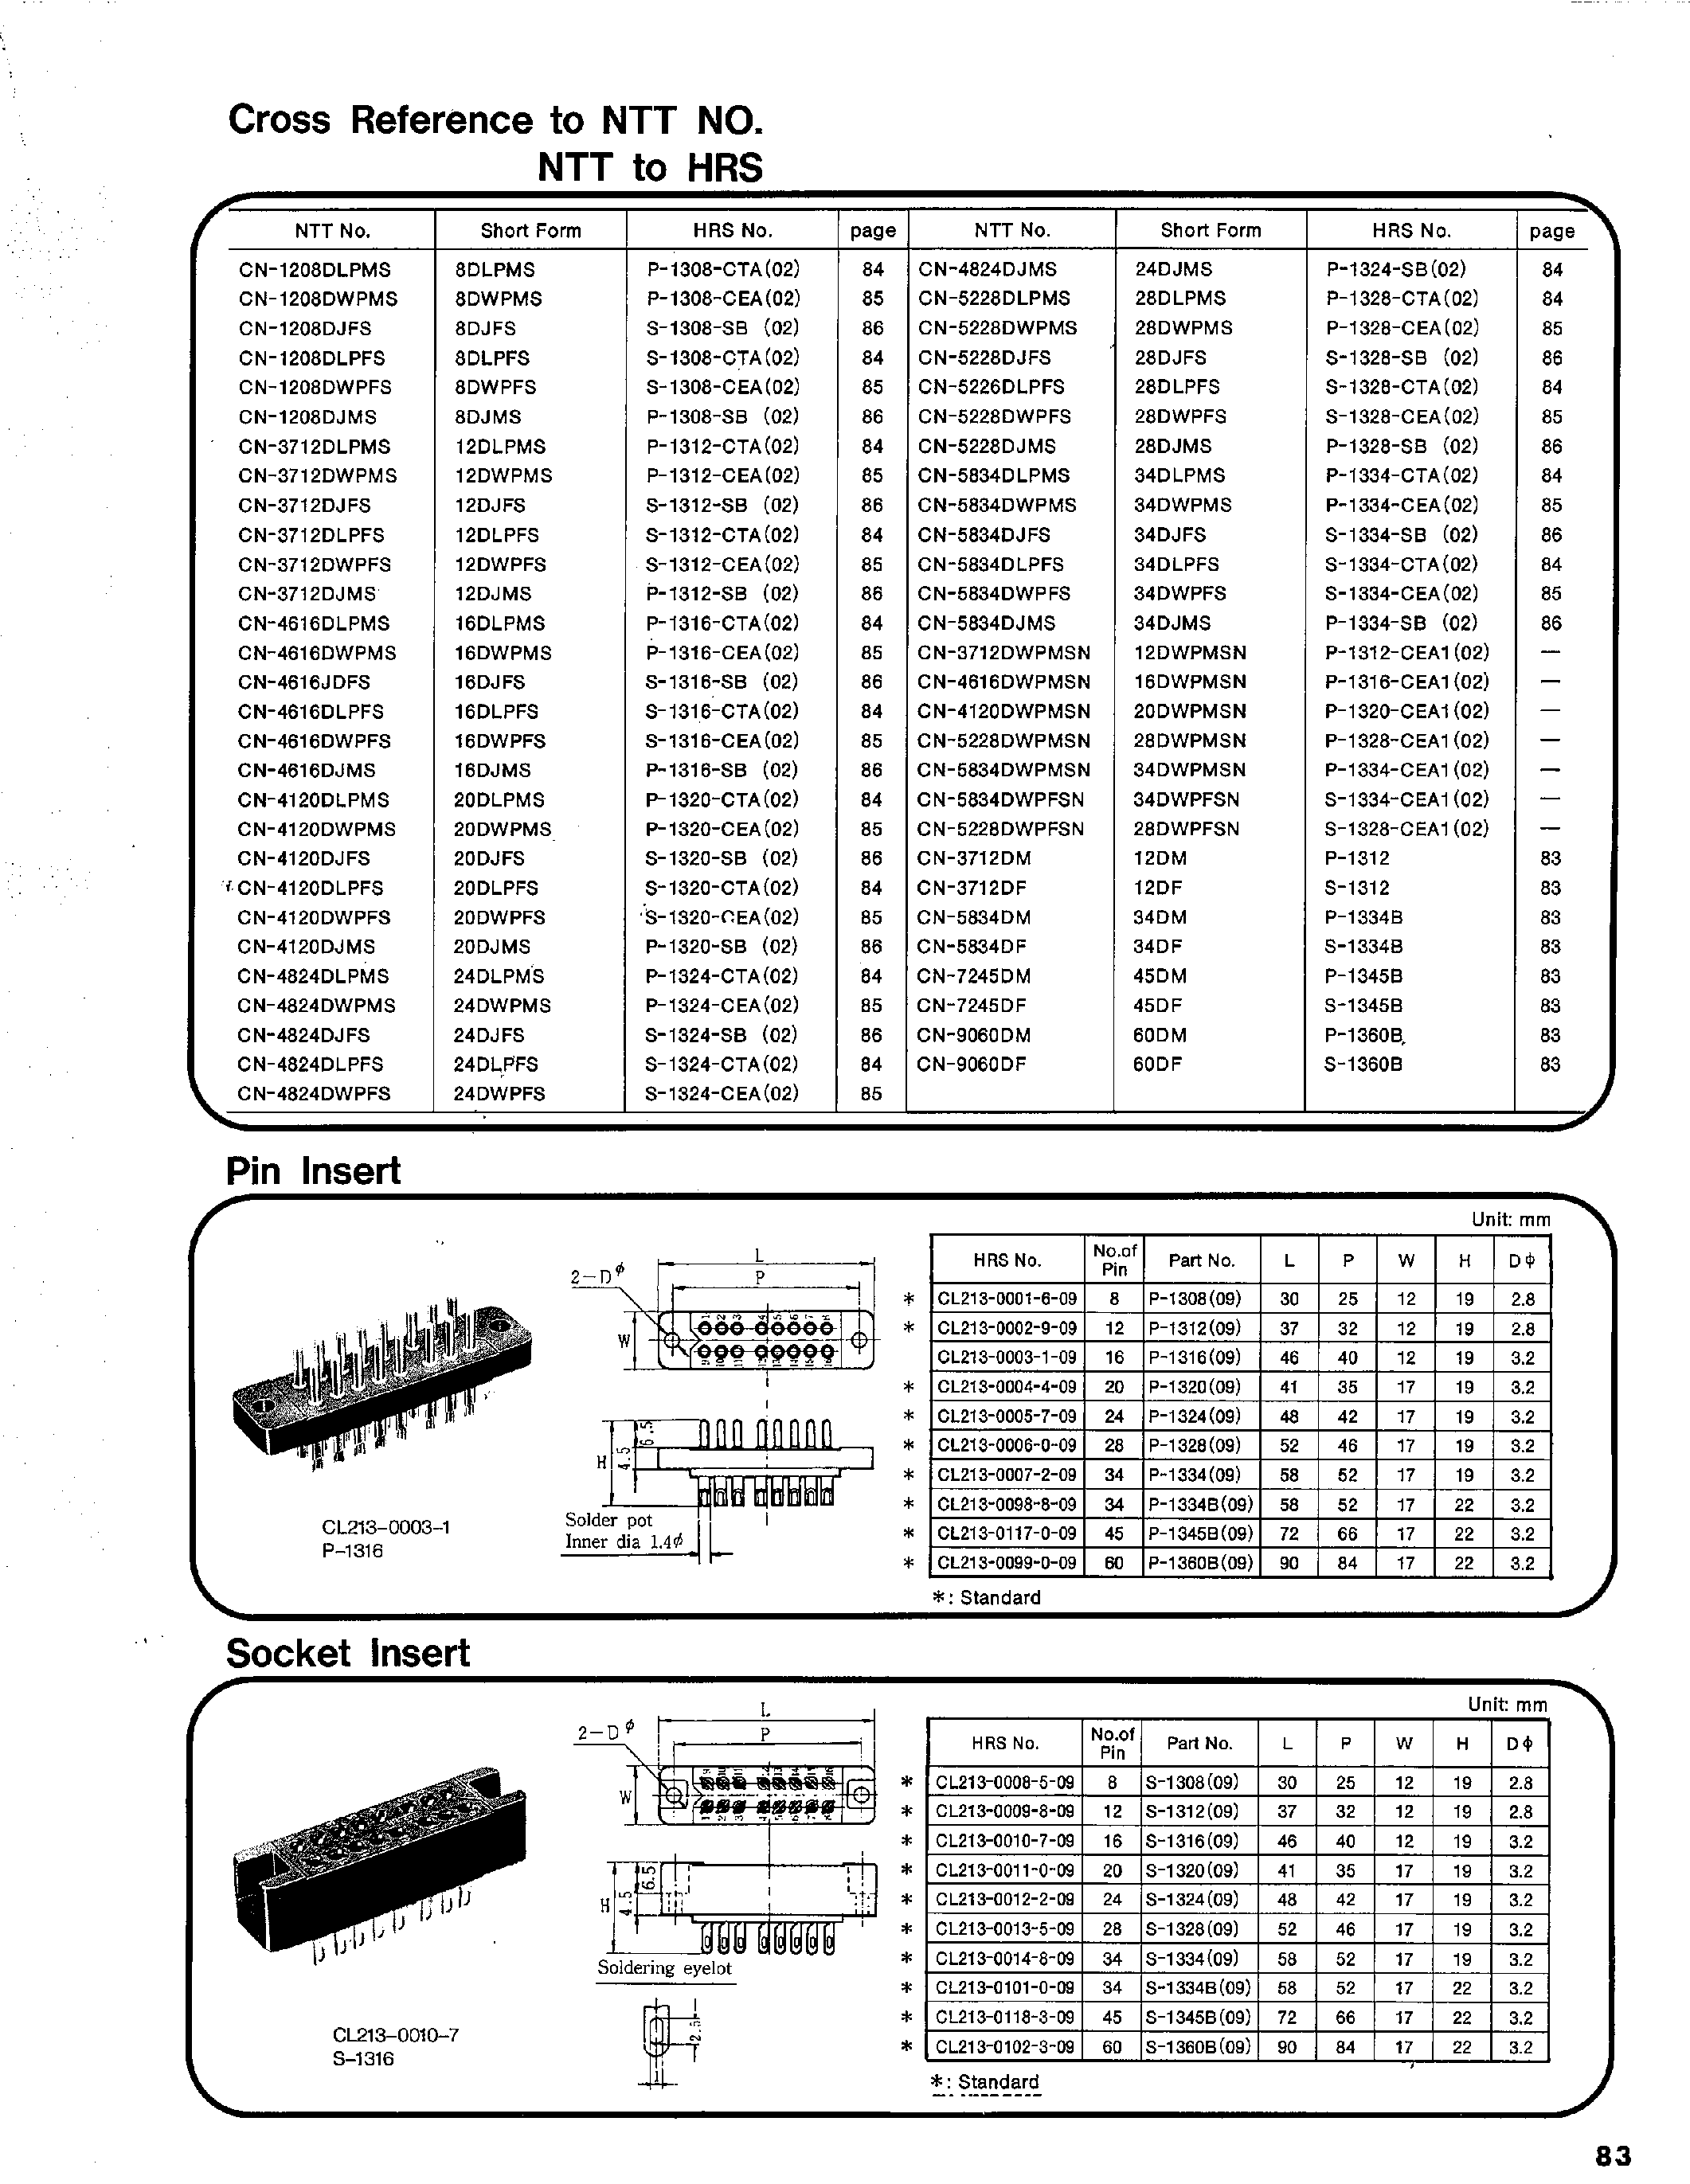 Datasheet P-1334W-CE - 1300 SERIES RECTANGULAR CONNECTORS page 2